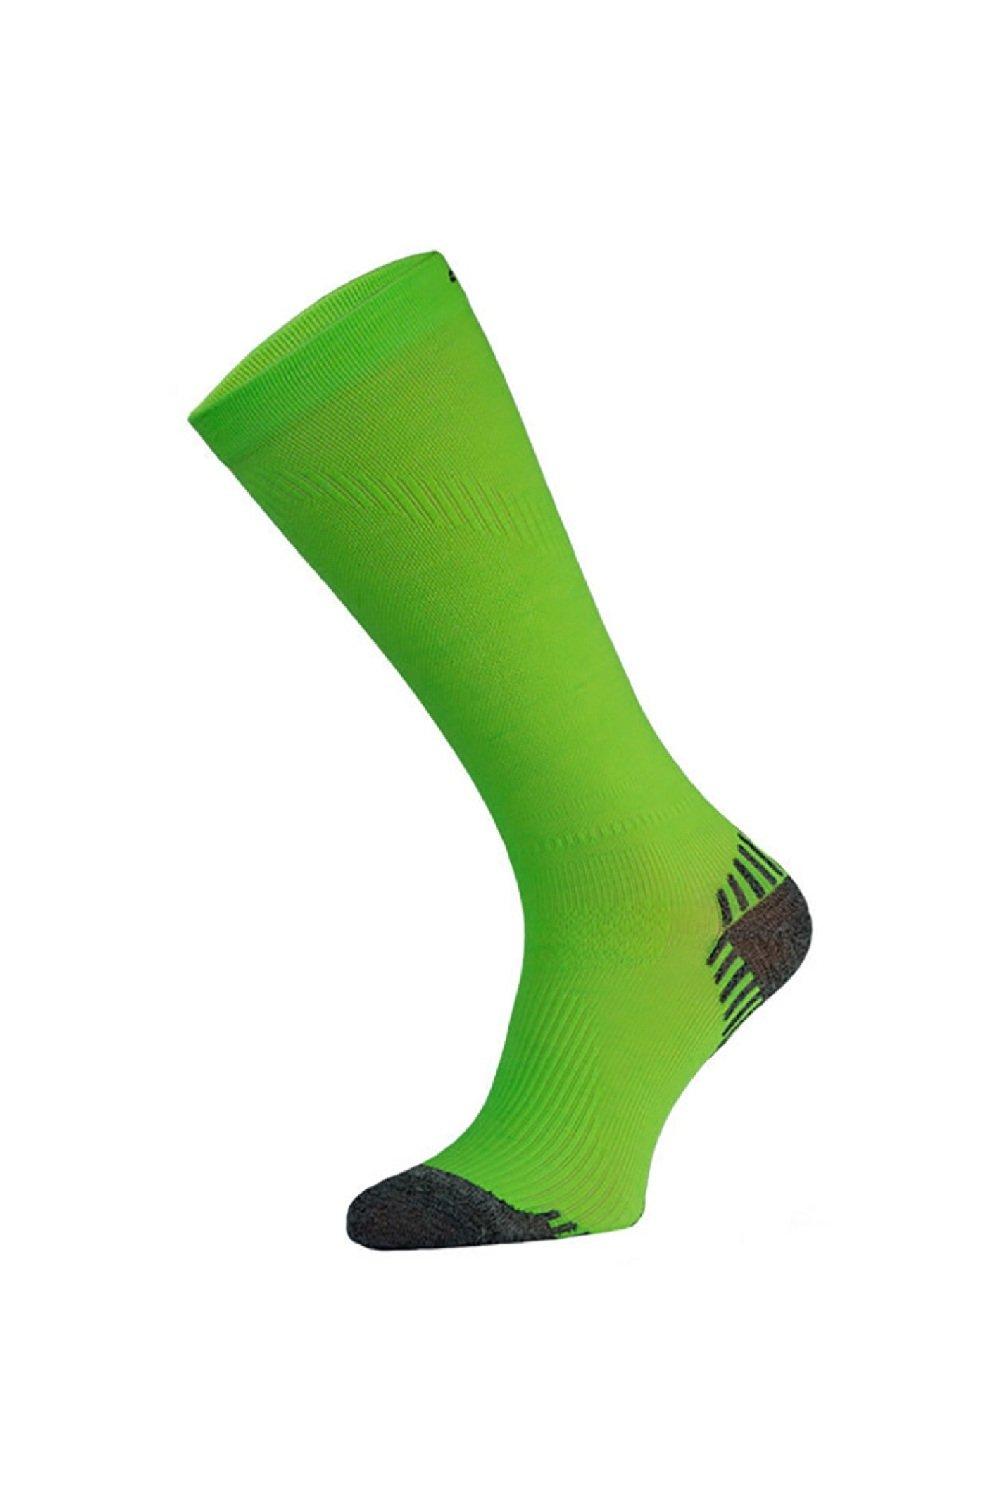 Long Knee High Running Compression Sport Socks